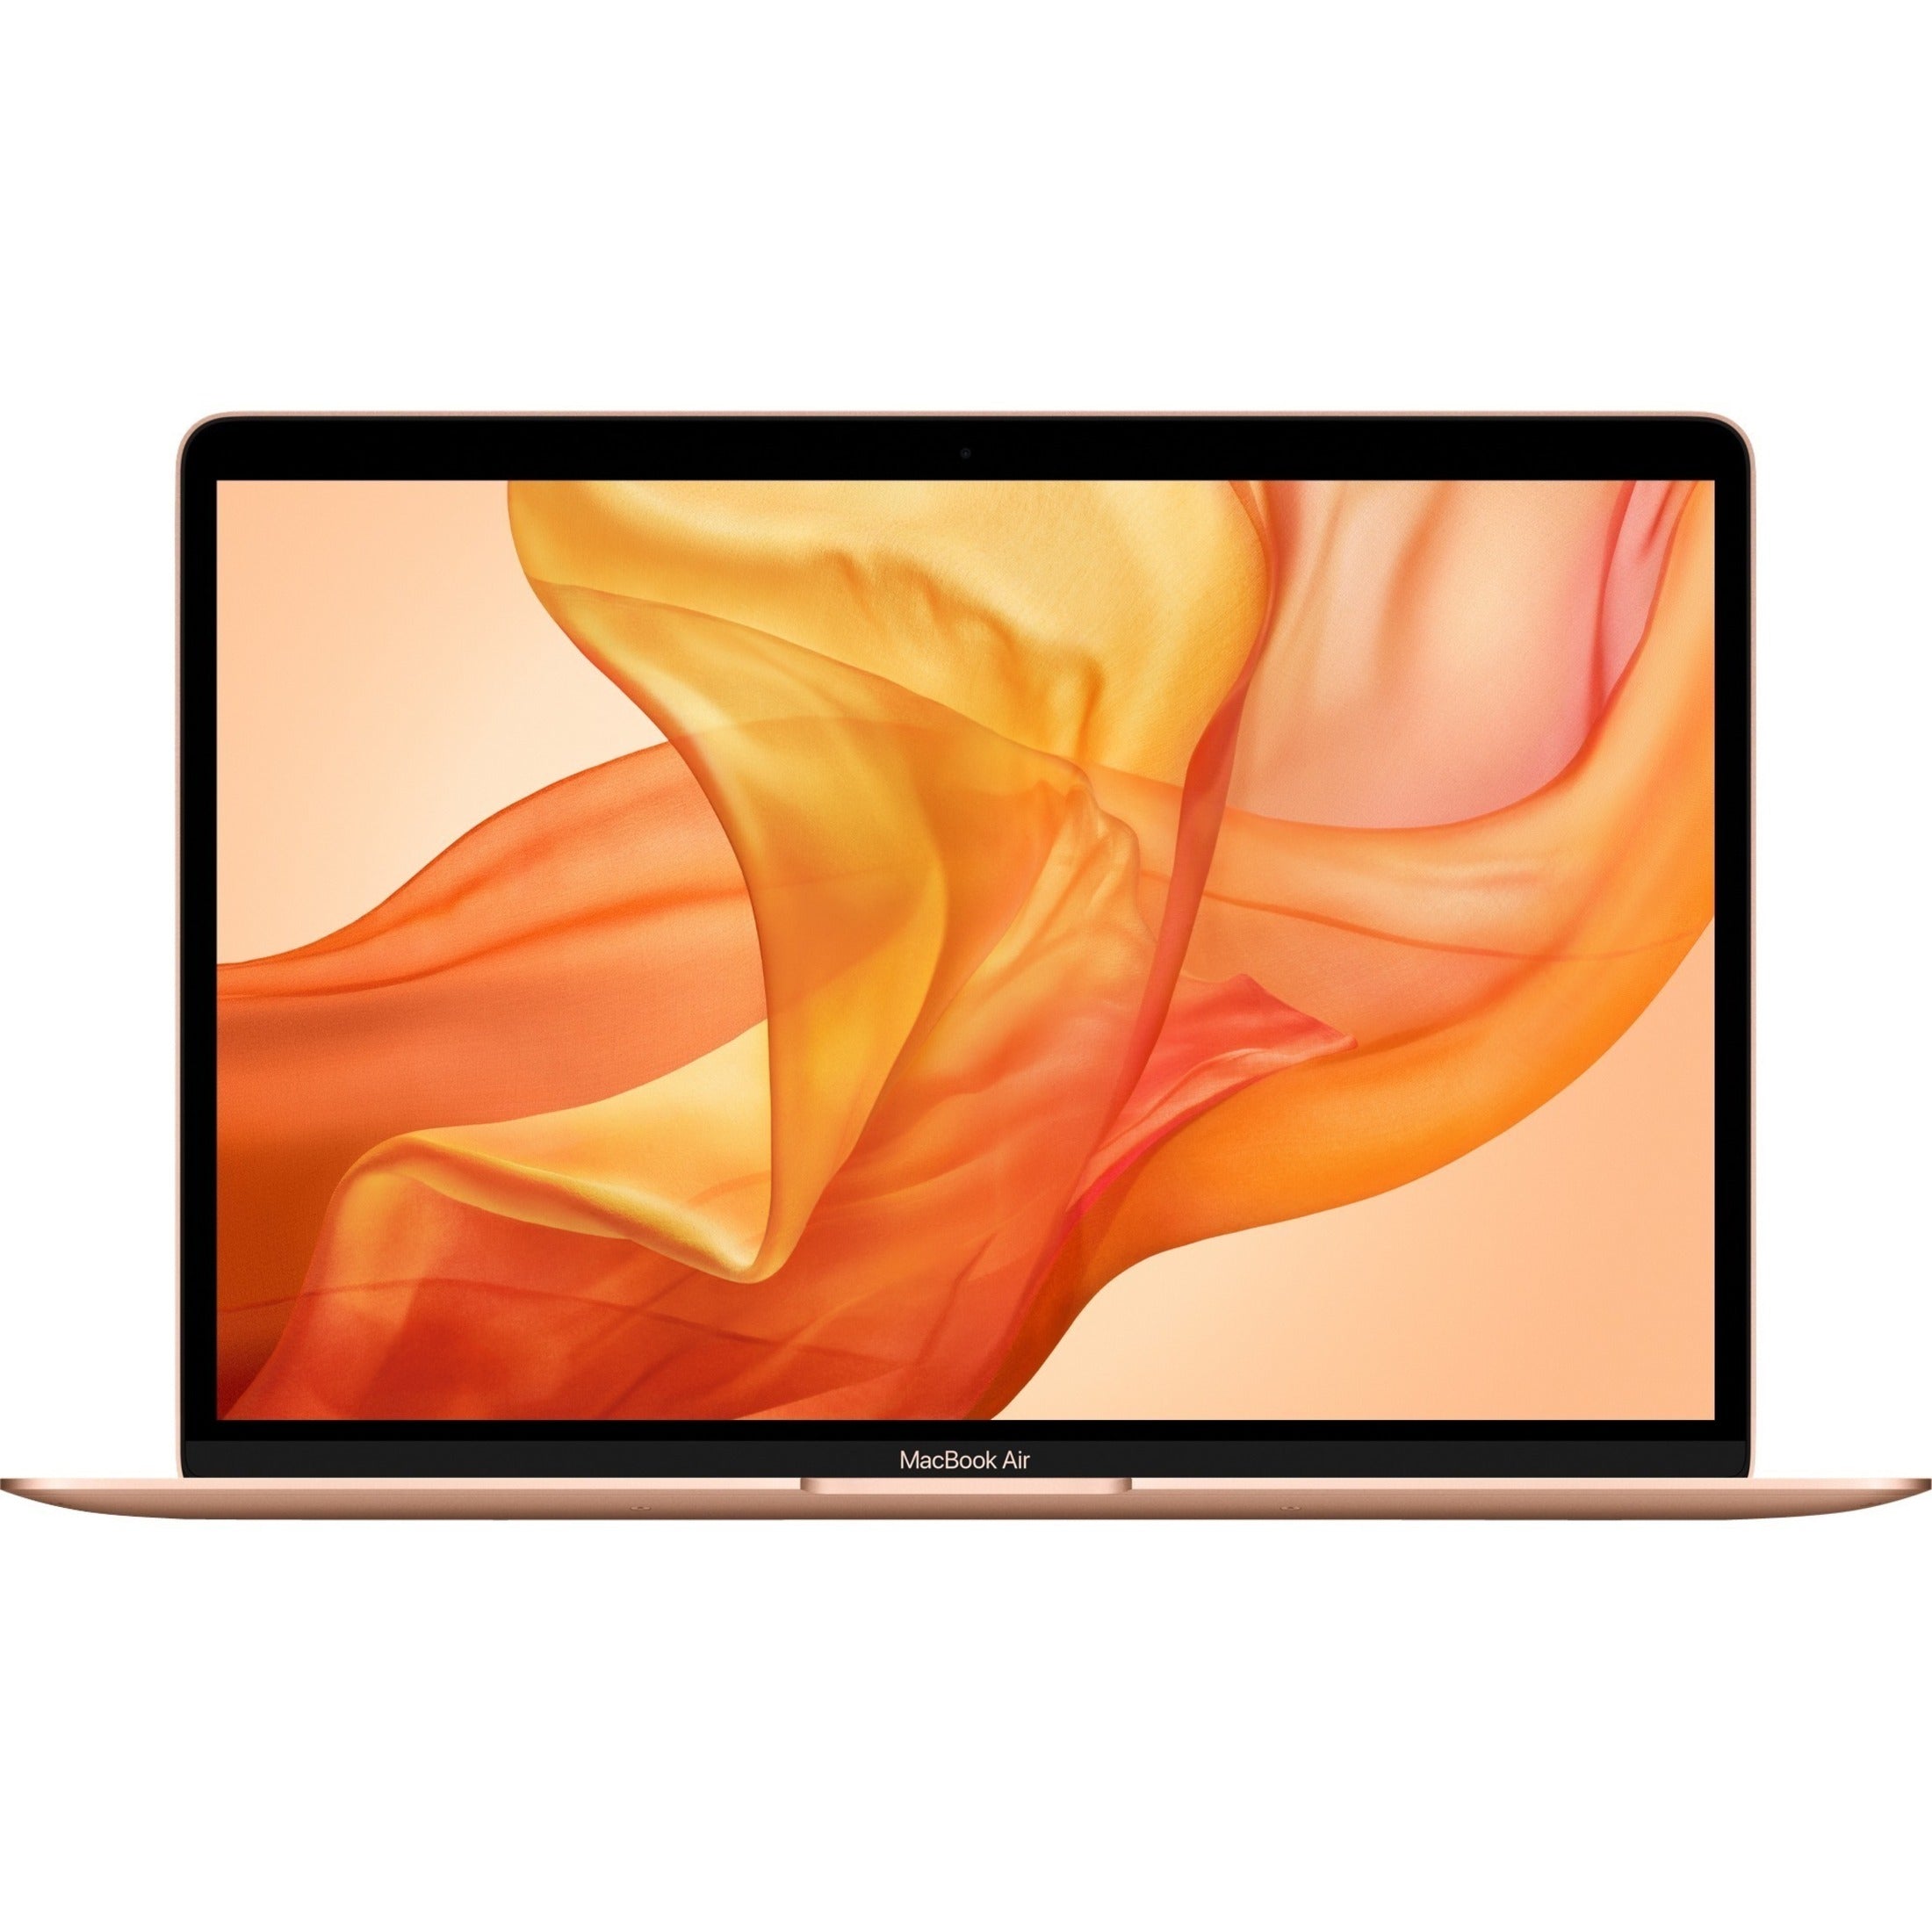 Apple MVFM2LL/A MacBook Air 13.3 Gold, 8GB RAM, 128GB SSD, macOS Mojave